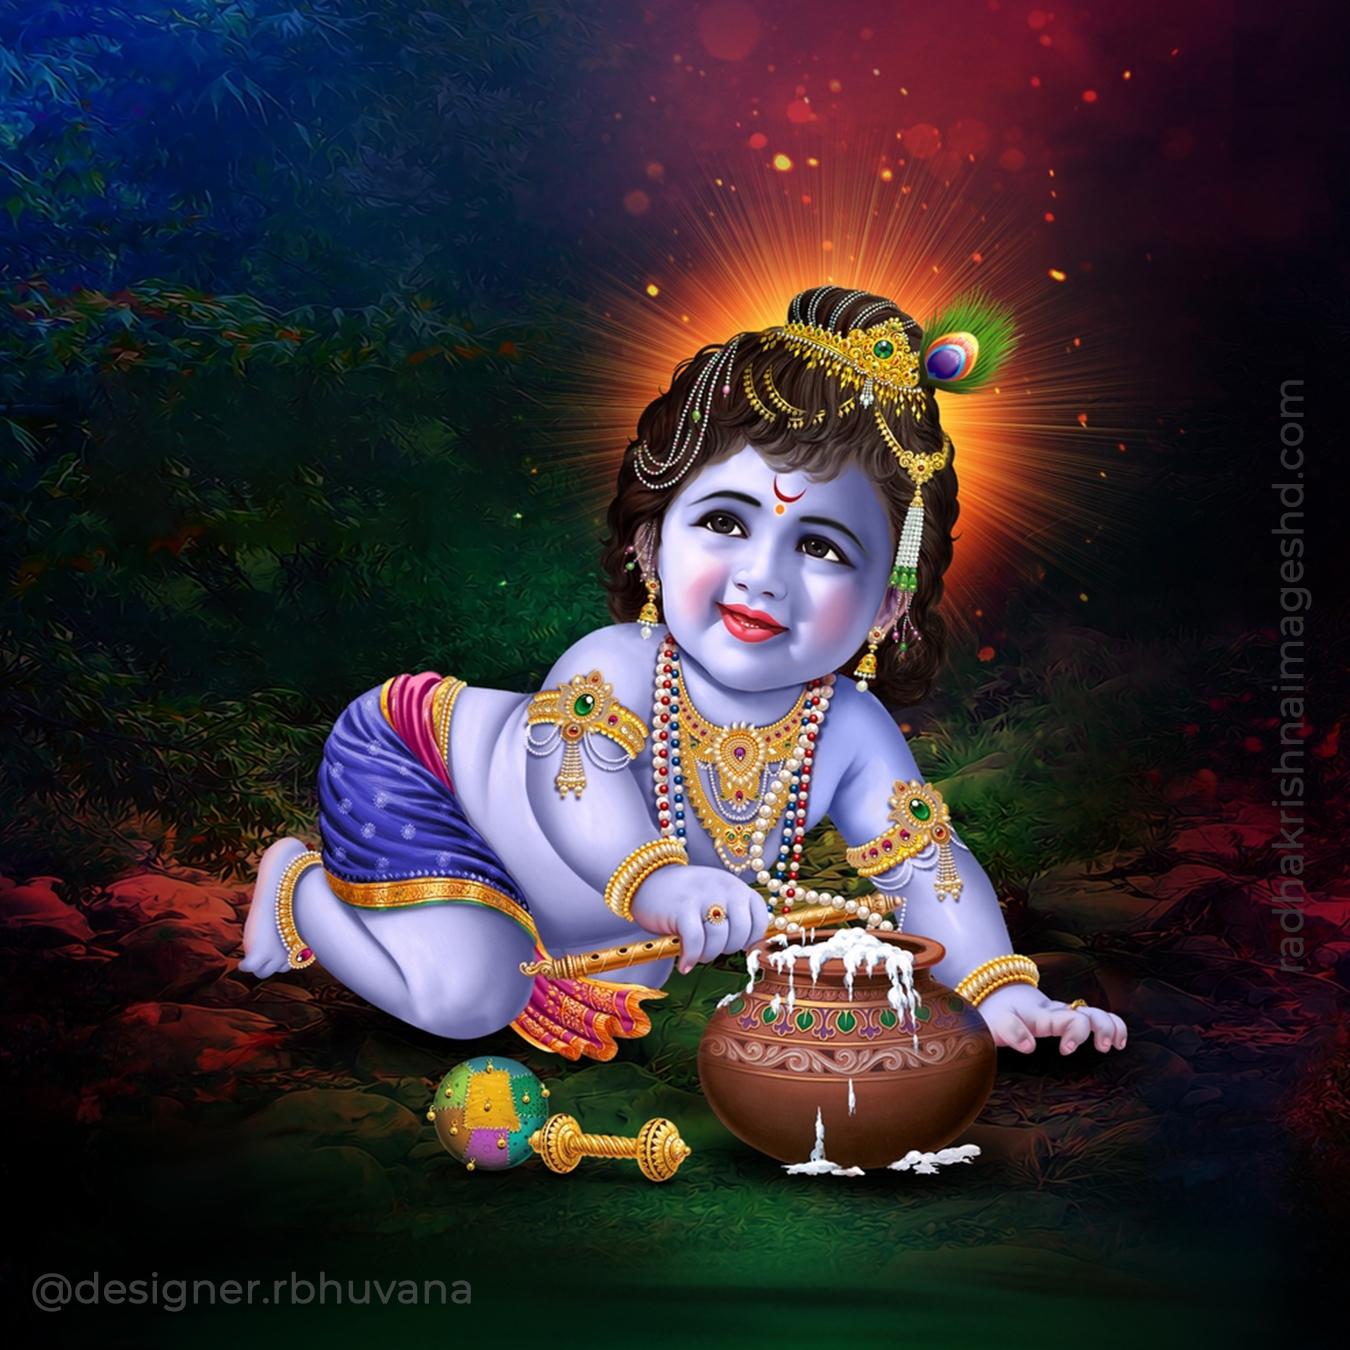 35+ Best Cute Krishna Wallpapers HD Free Download